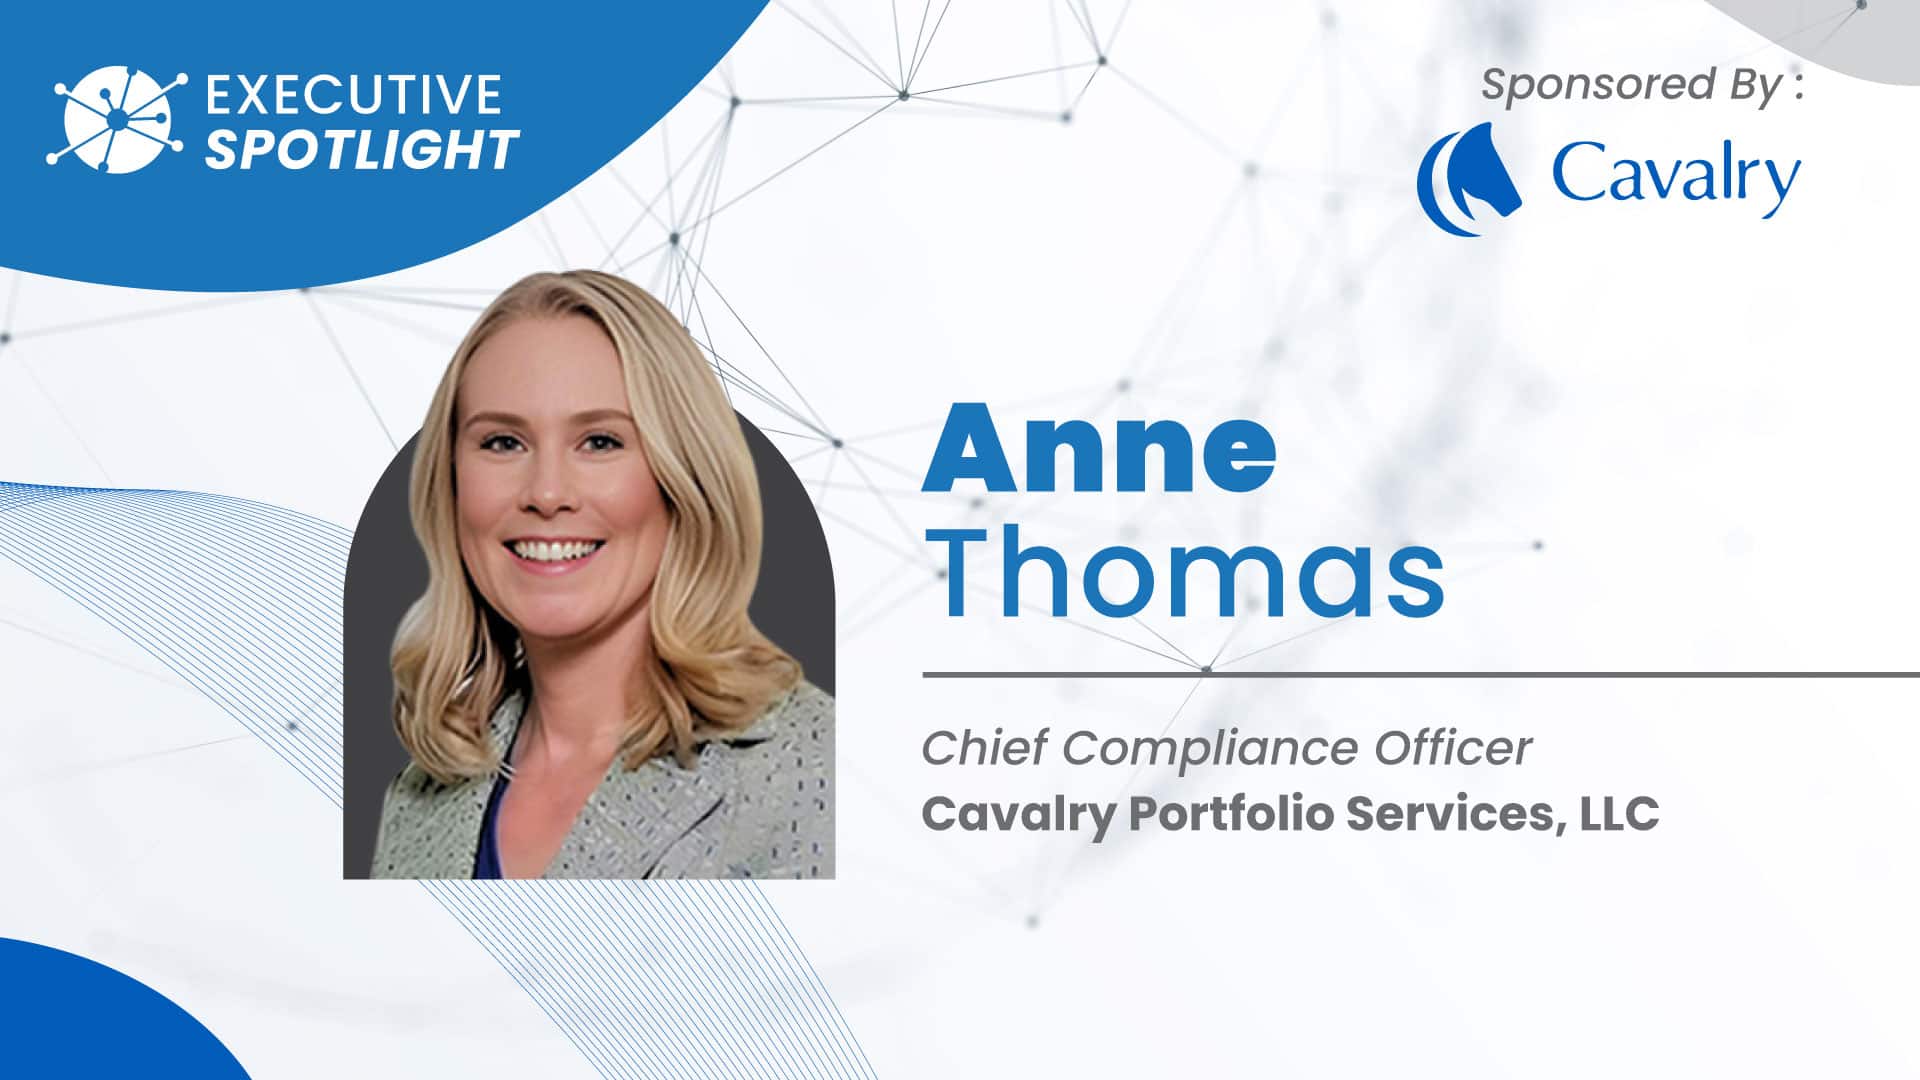 Executive Spotlight with Anne Thomas